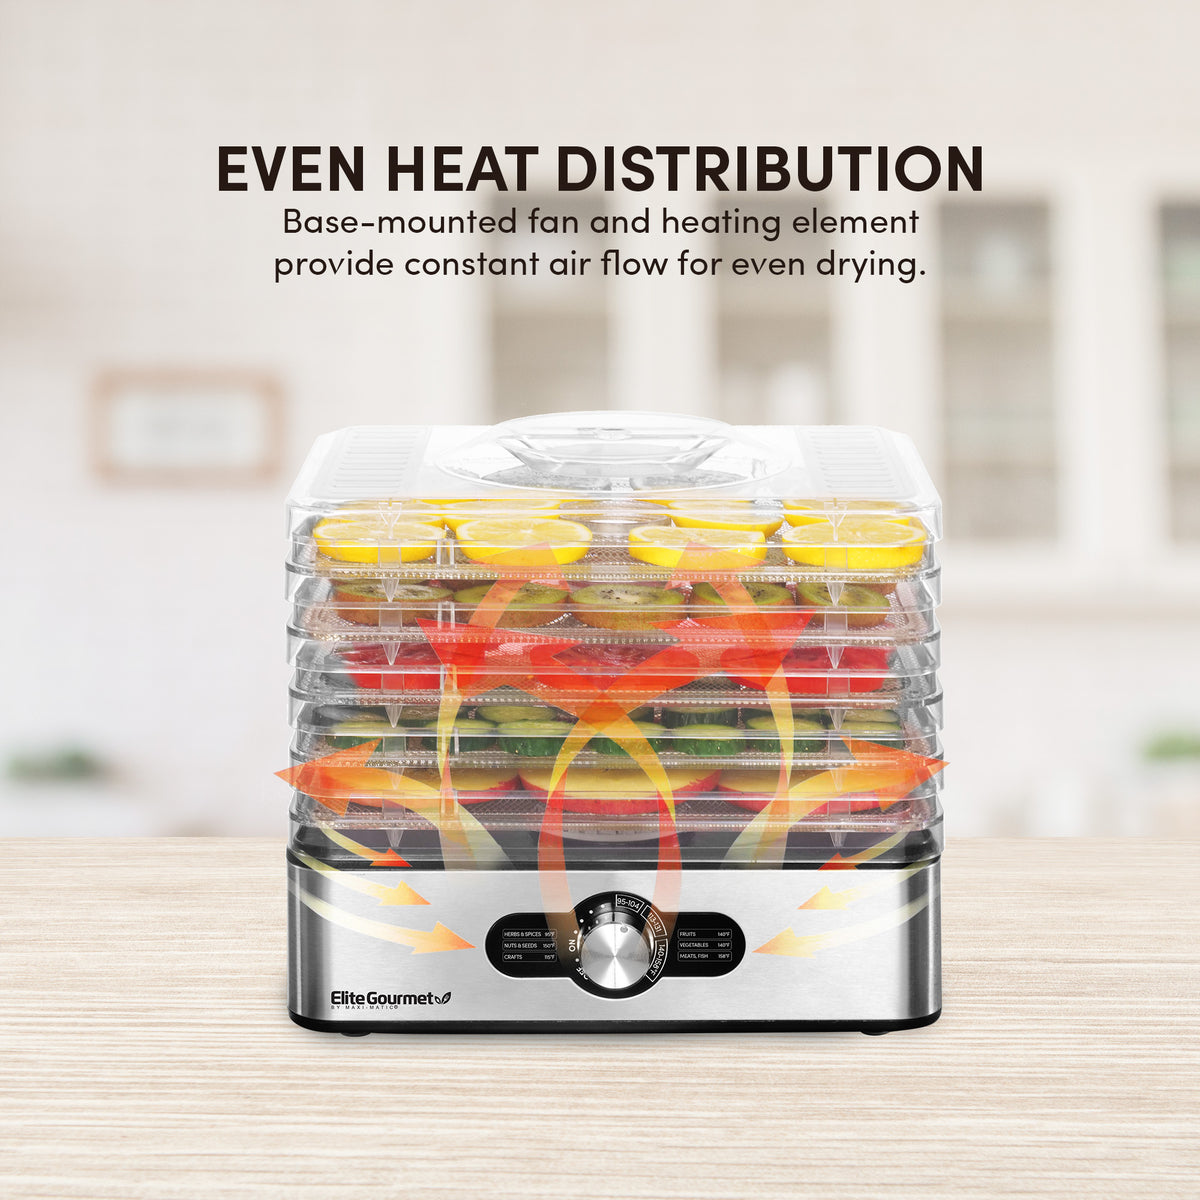  Elite Gourmet EFD319DKG Food Dehydrator, 5 BPA-Free 11.4 Trays  Adjustable Temperature Controls, Jerky, Herbs, Fruit, Veggies, Dried  Snacks, Black and Grey: Home & Kitchen